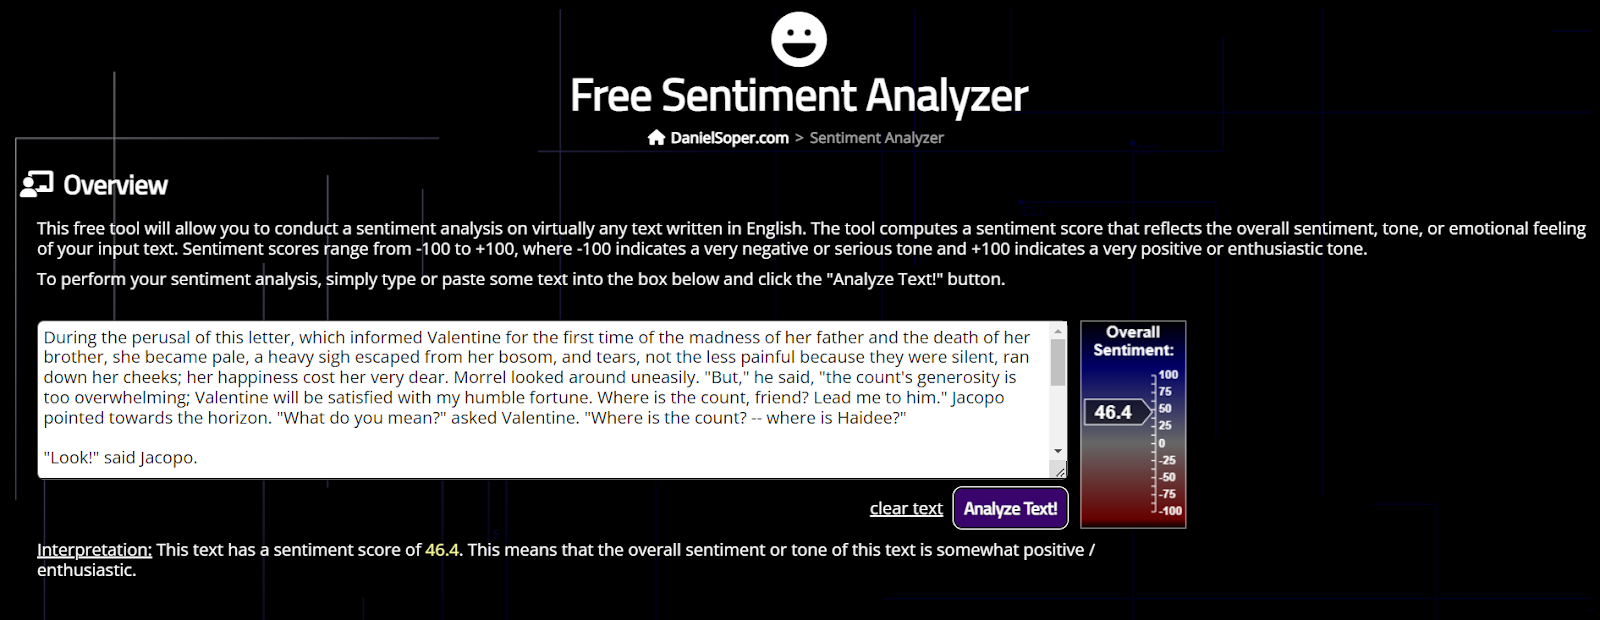 Sentiment analyzer tool